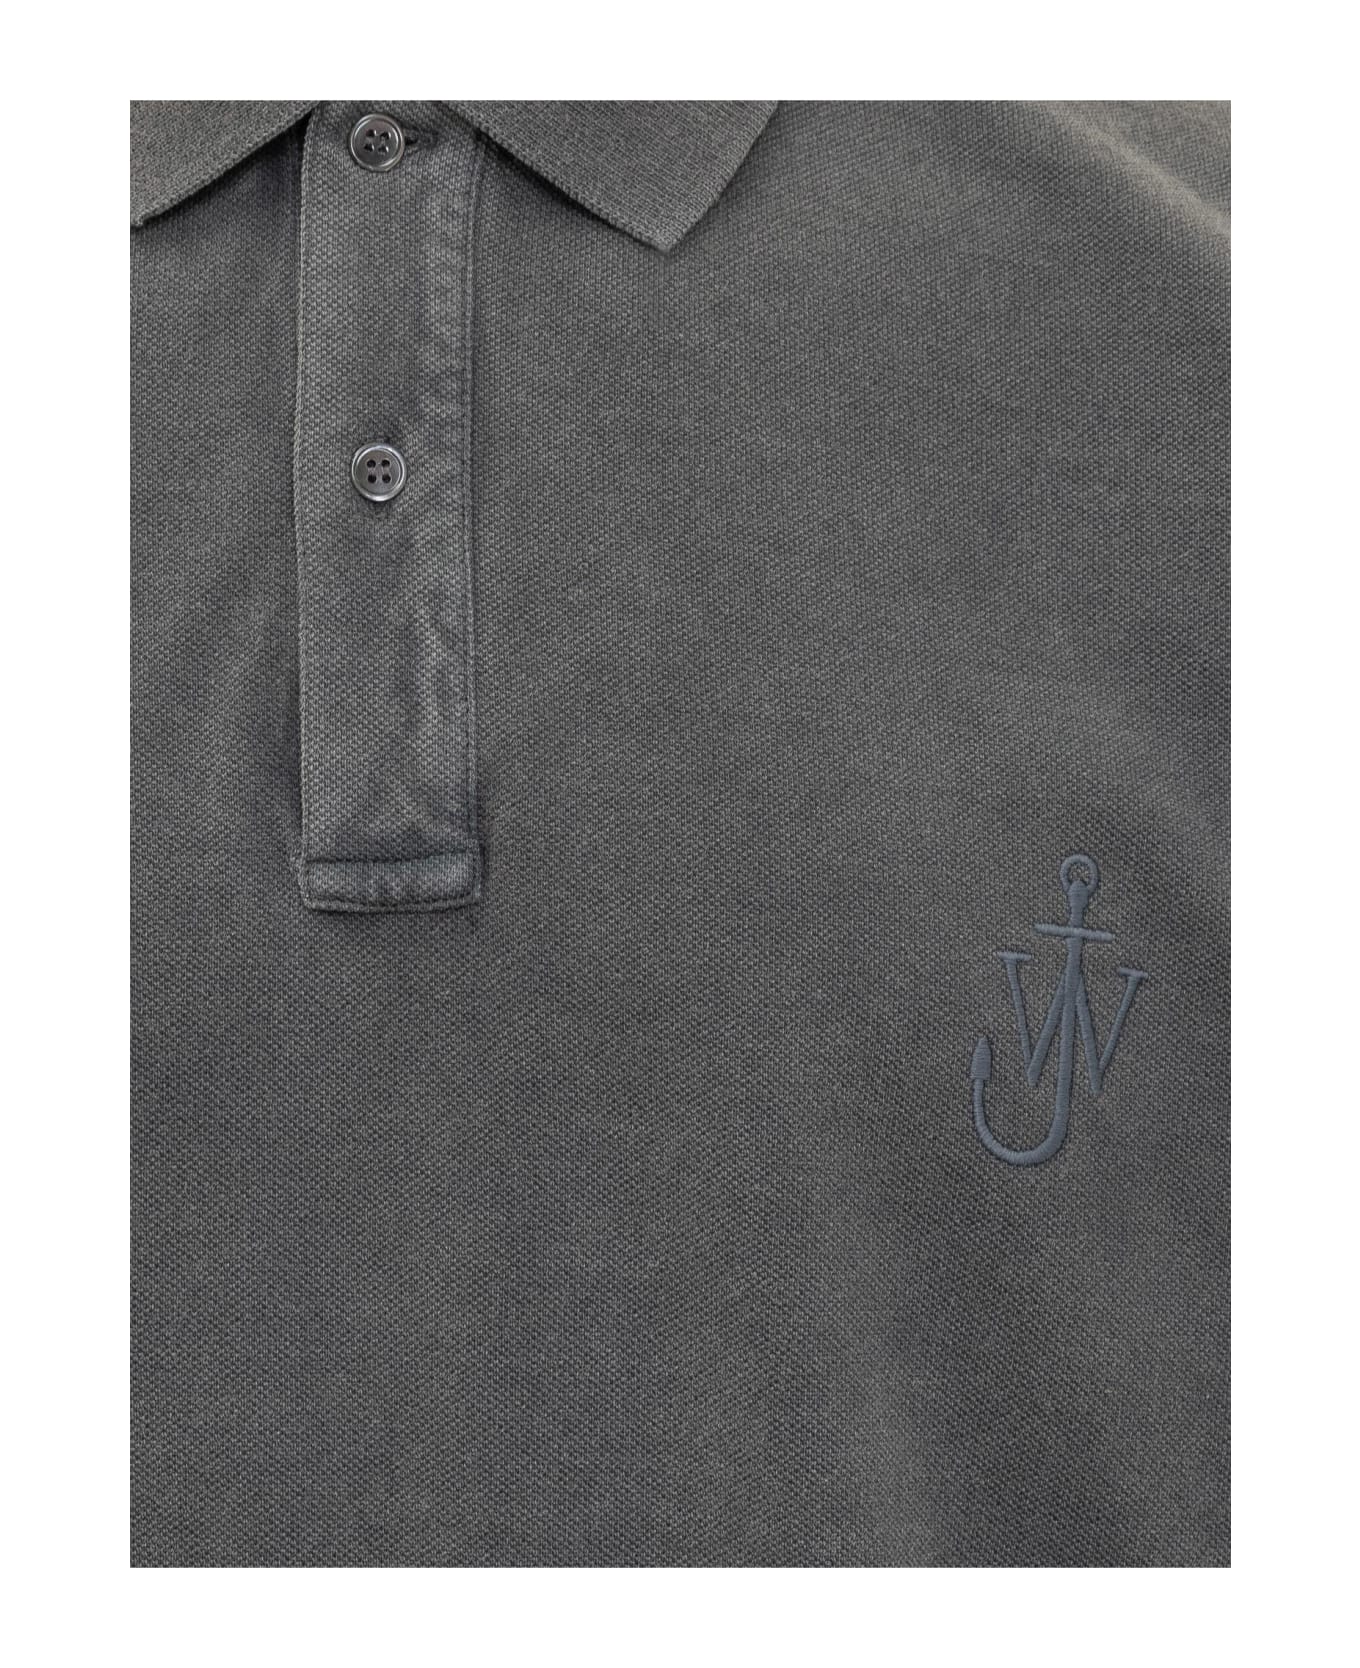 J.W. Anderson Jwa Anchor Polo Shirt - CHARCOAL ポロシャツ